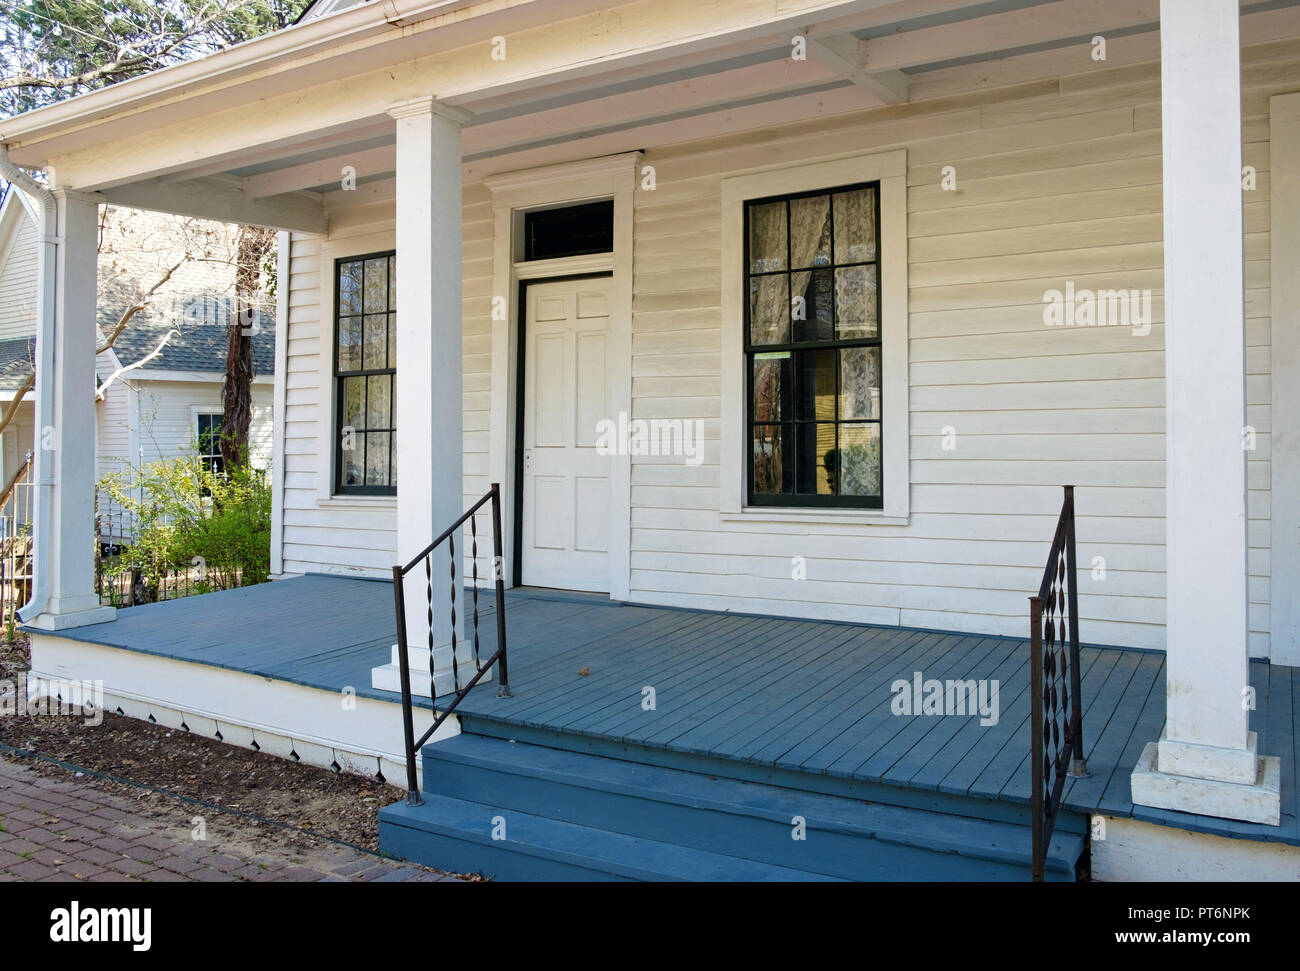 Porche de entrada blanco tejano shingled antigua casa, construida en 1854.Blue piso de madera. Ferias casa, plaza de castaños, Mckinney Texas.horizontal Foto de stock